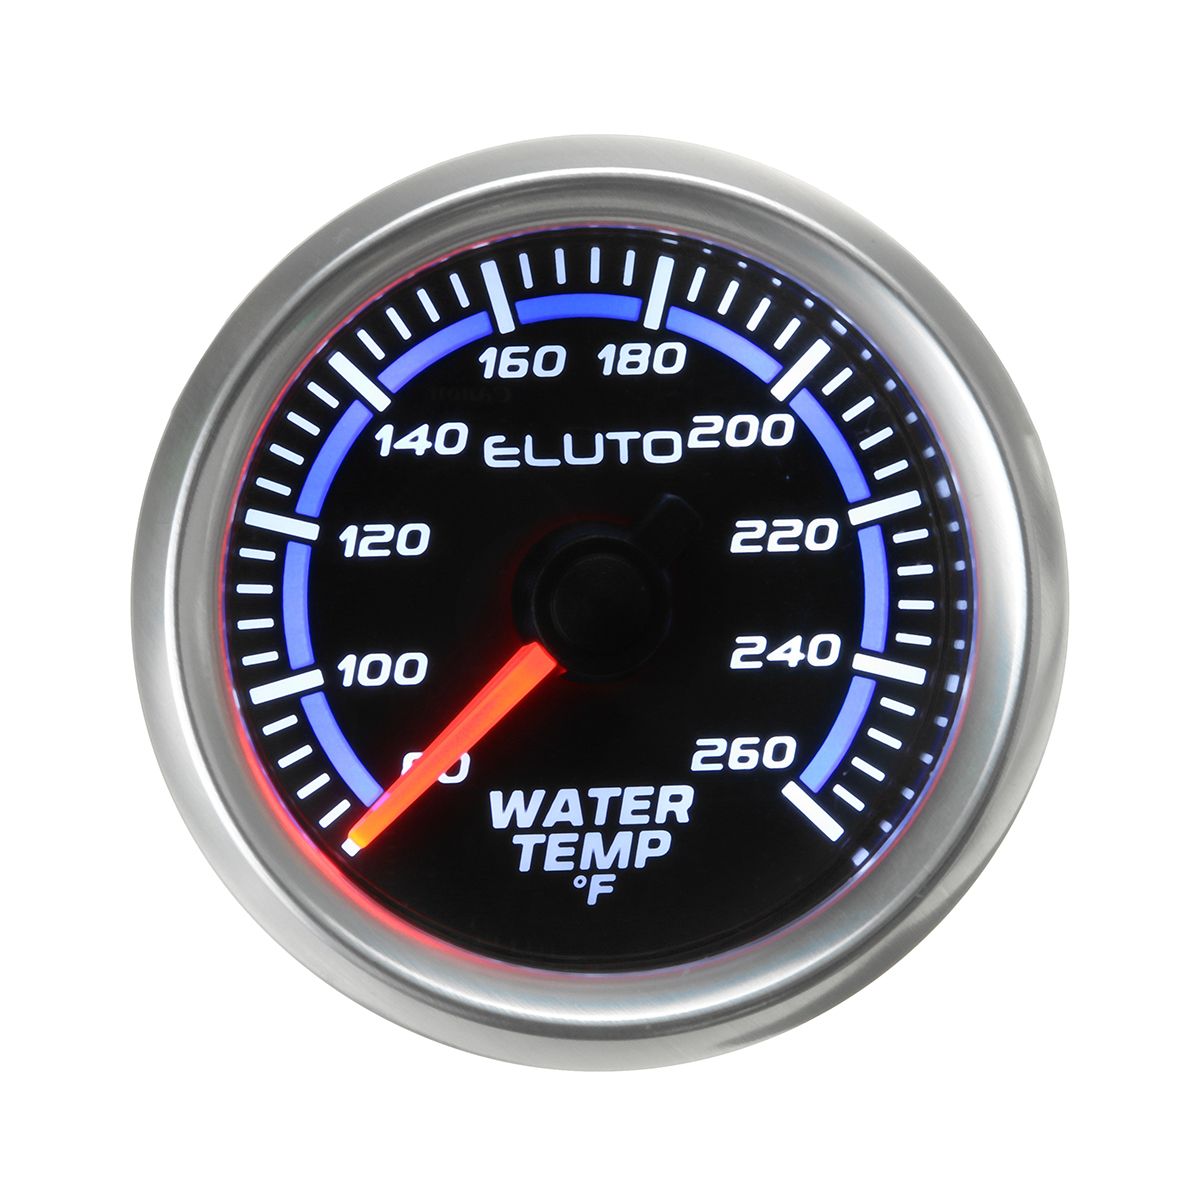 2quot-52mm-80-260degF-Water-Temperature-Gauge-Blue-LED-Black-Face-Car-Meter--Sensor-1743415